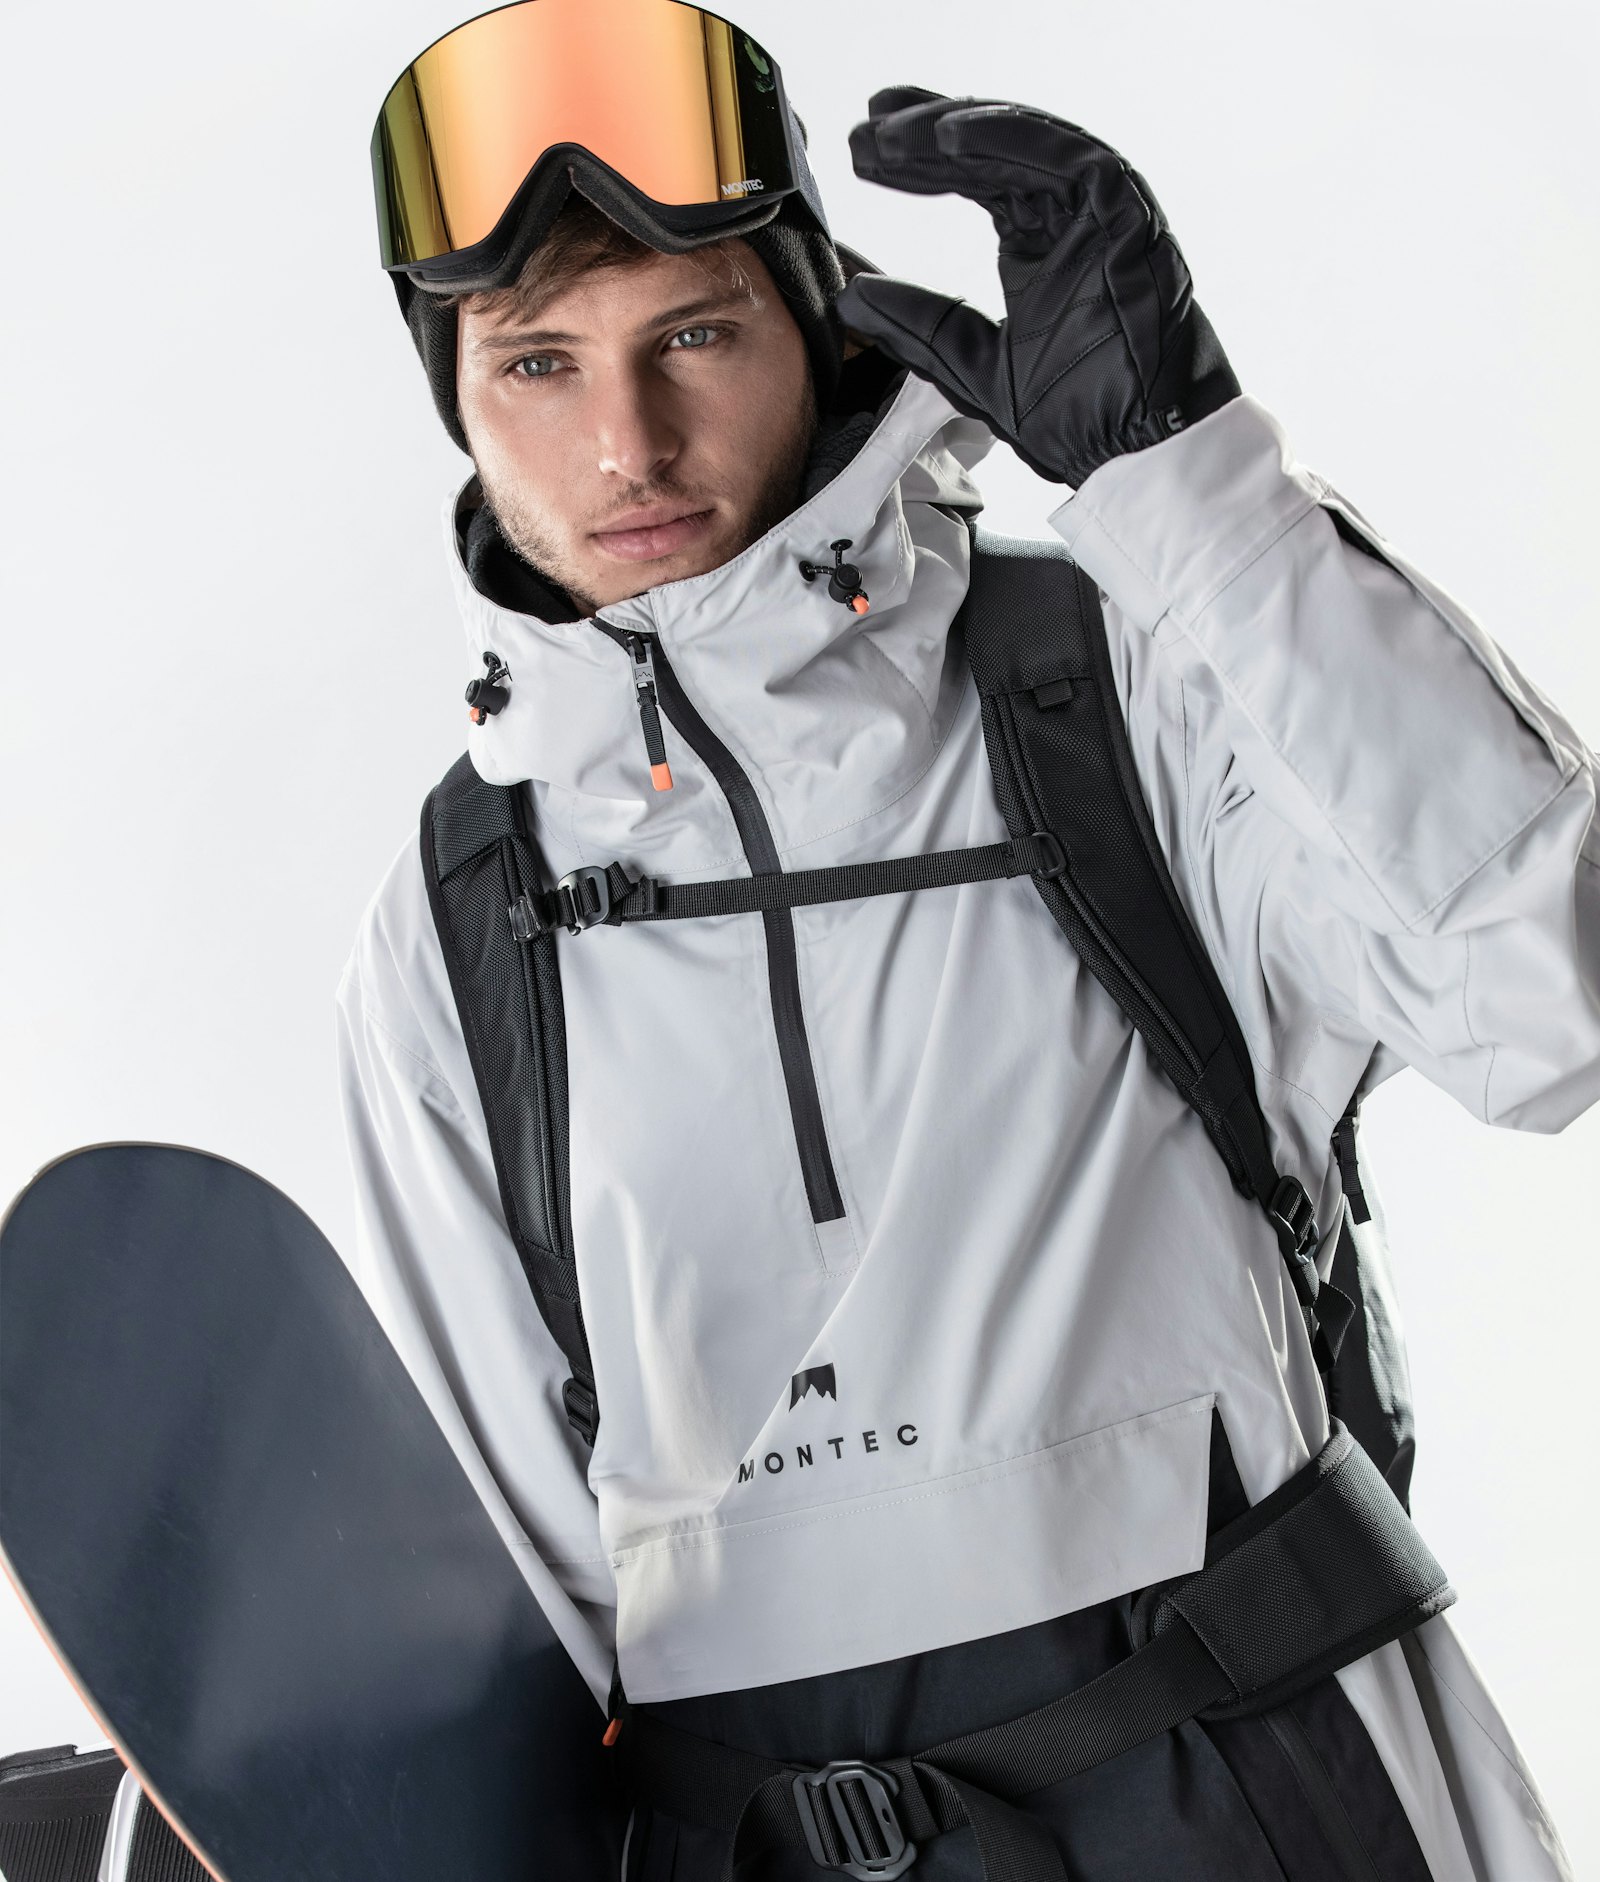 Typhoon 2020 Snowboard Jacket Men Light Grey/Black